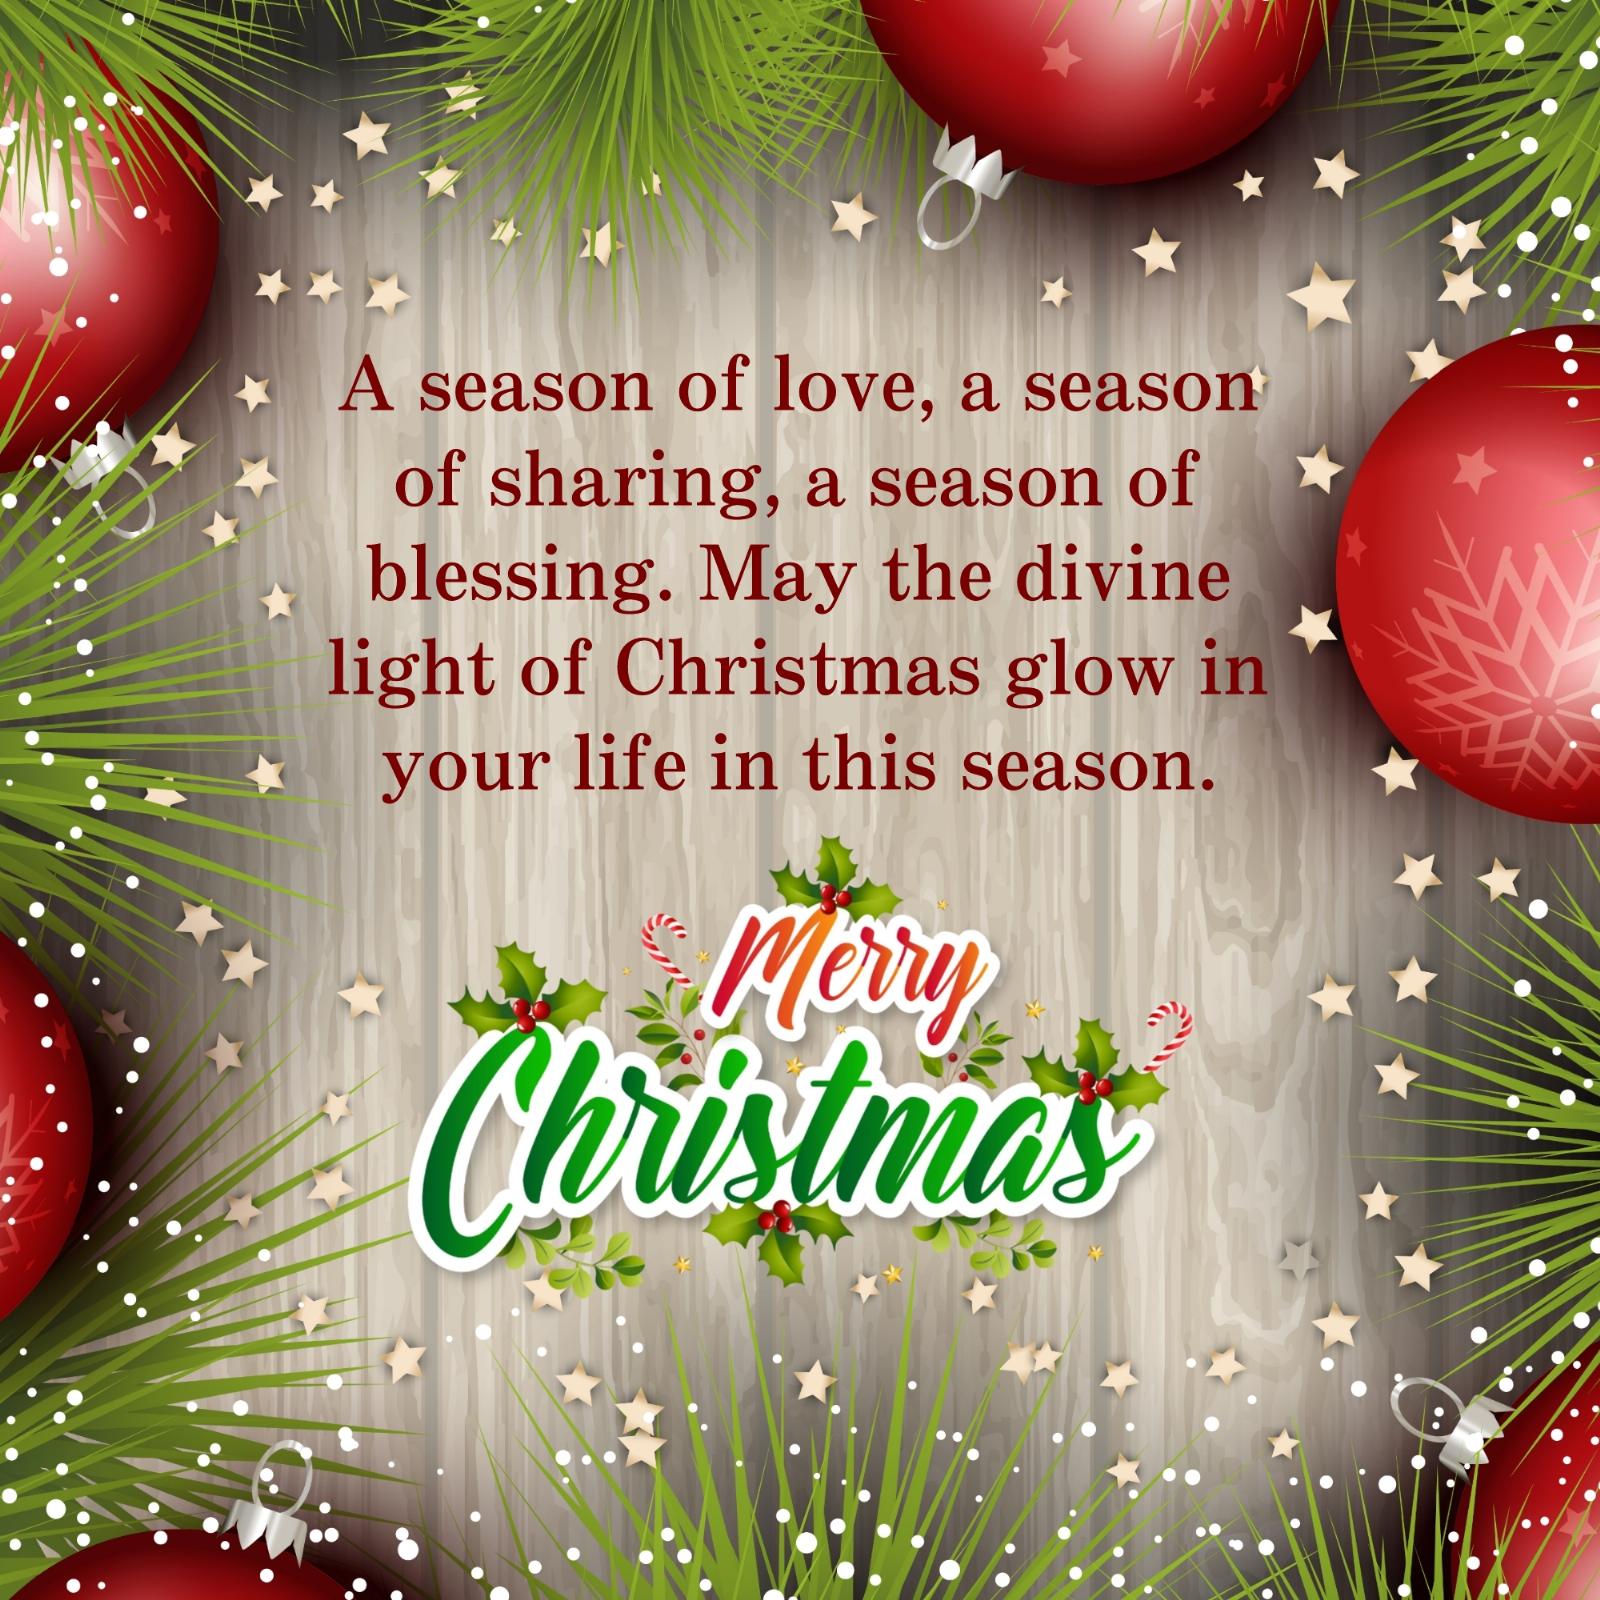 A season of love a season of sharing a season of blessing